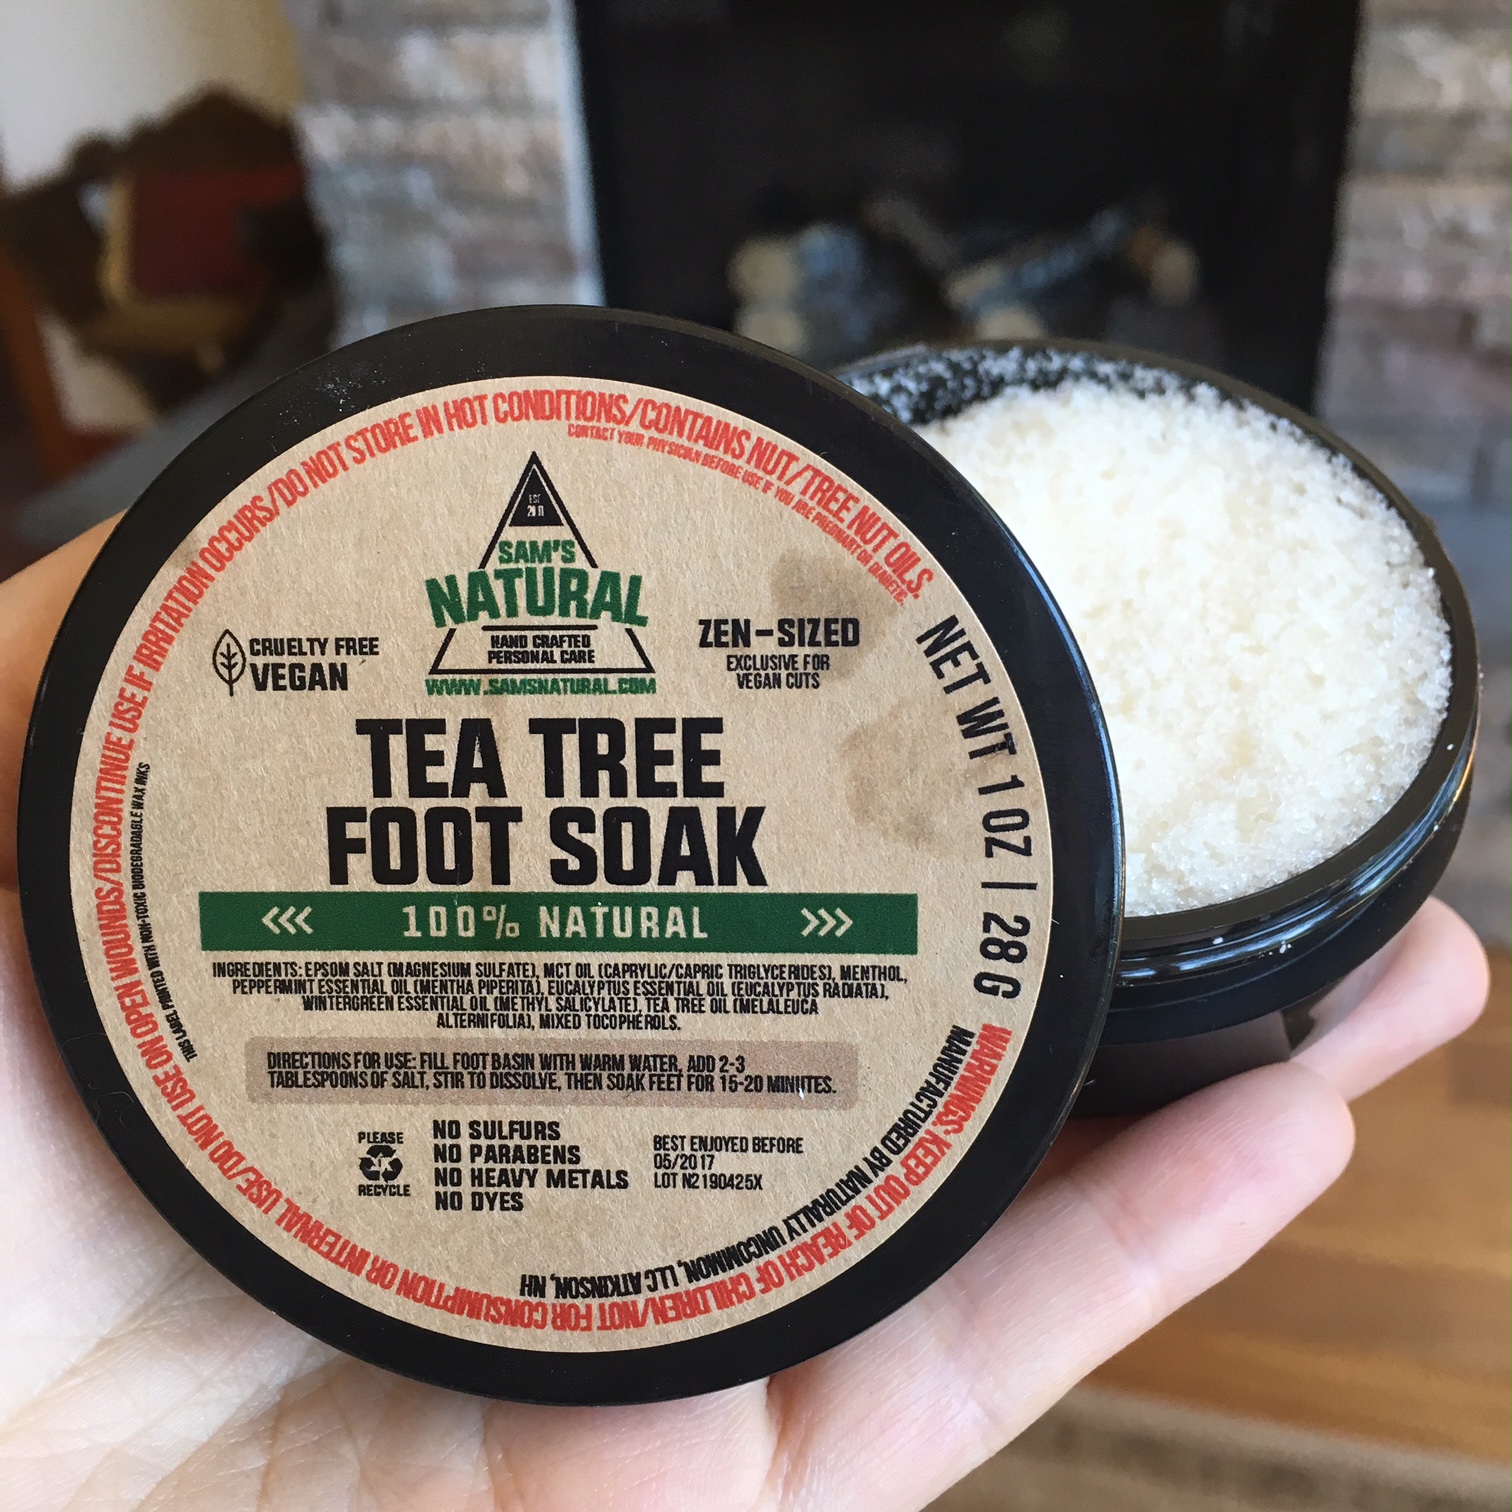 Sams Natural Tea Tree Foot Soak